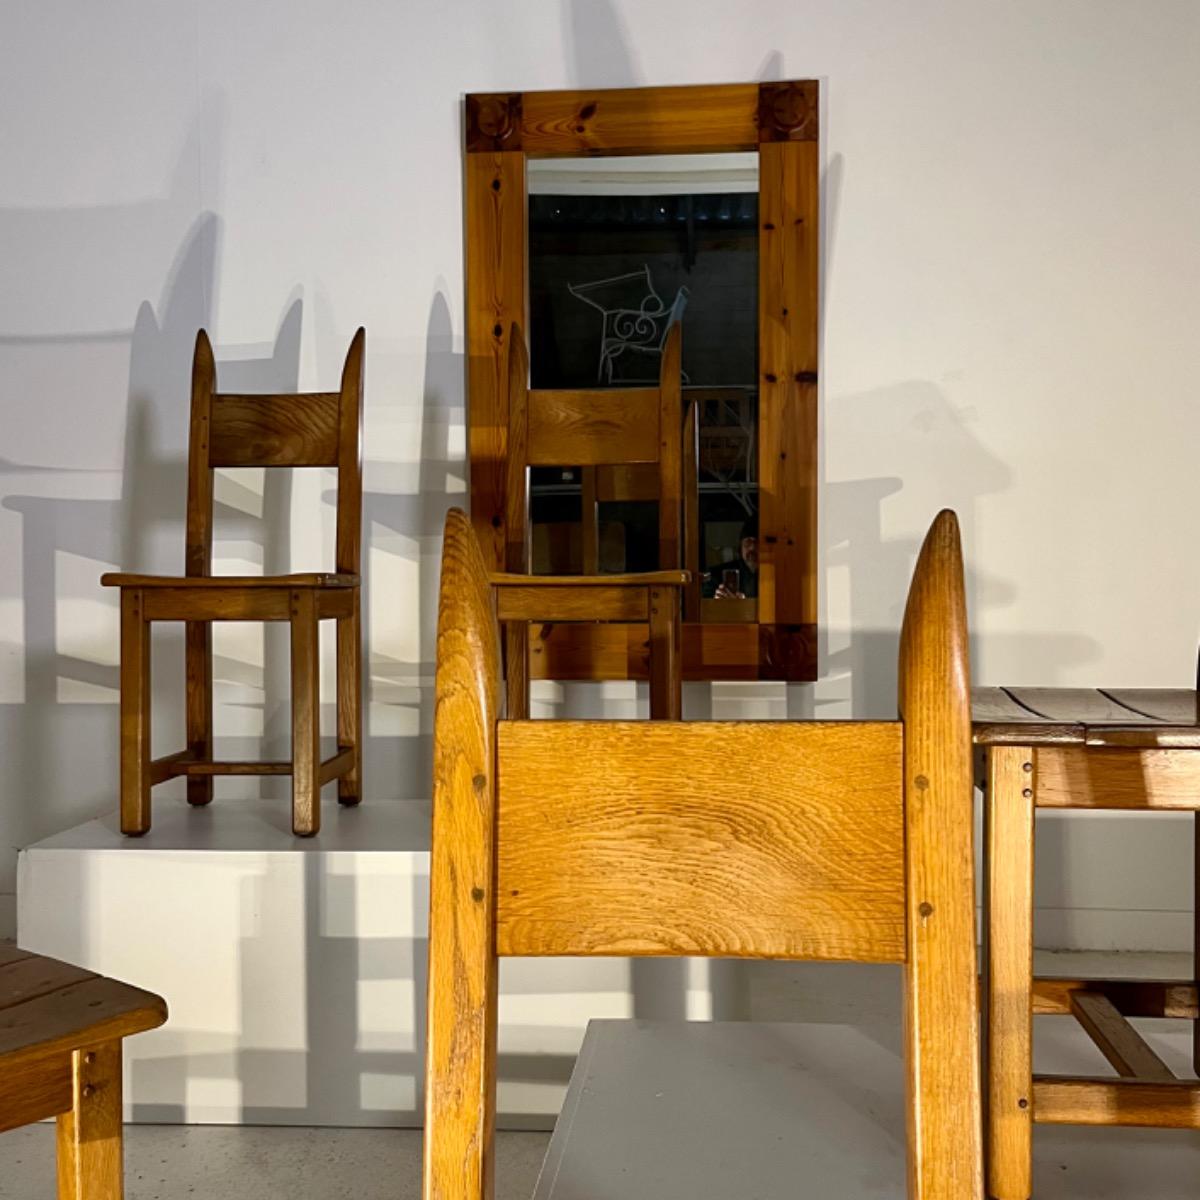 Set of 6 rustic modern oak chairs.